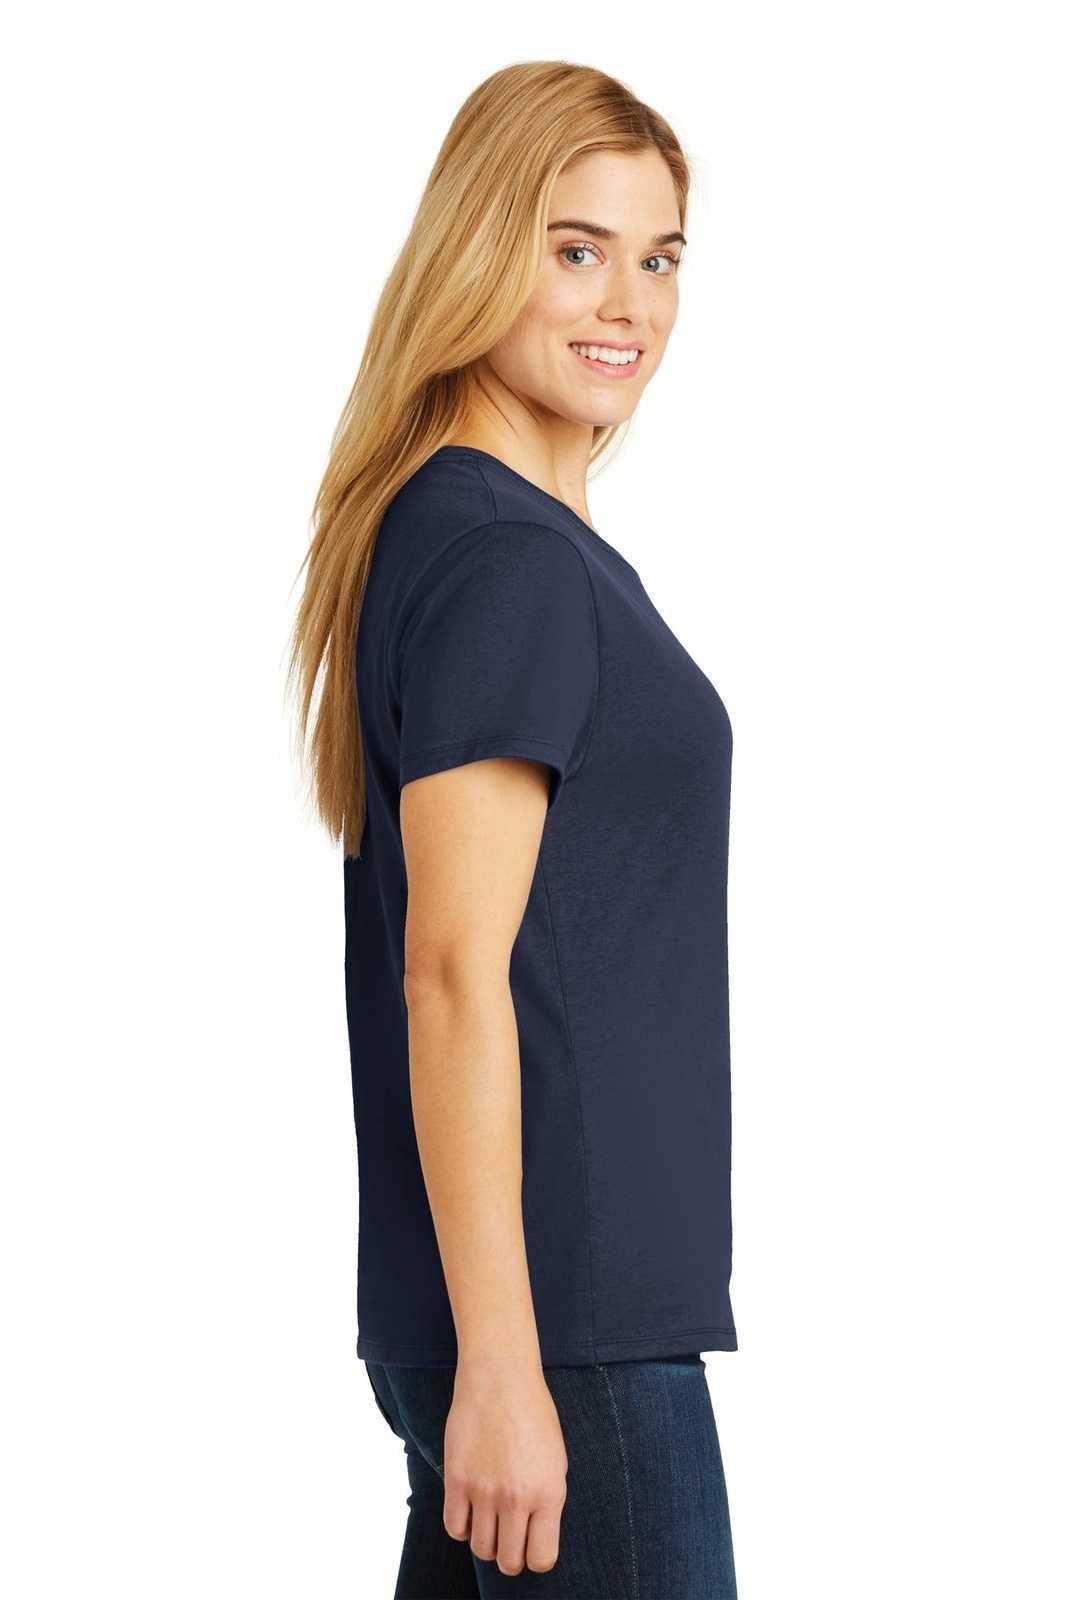 Hanes SL04 Ladies Nano-T Cotton T-Shirt - Navy - HIT a Double